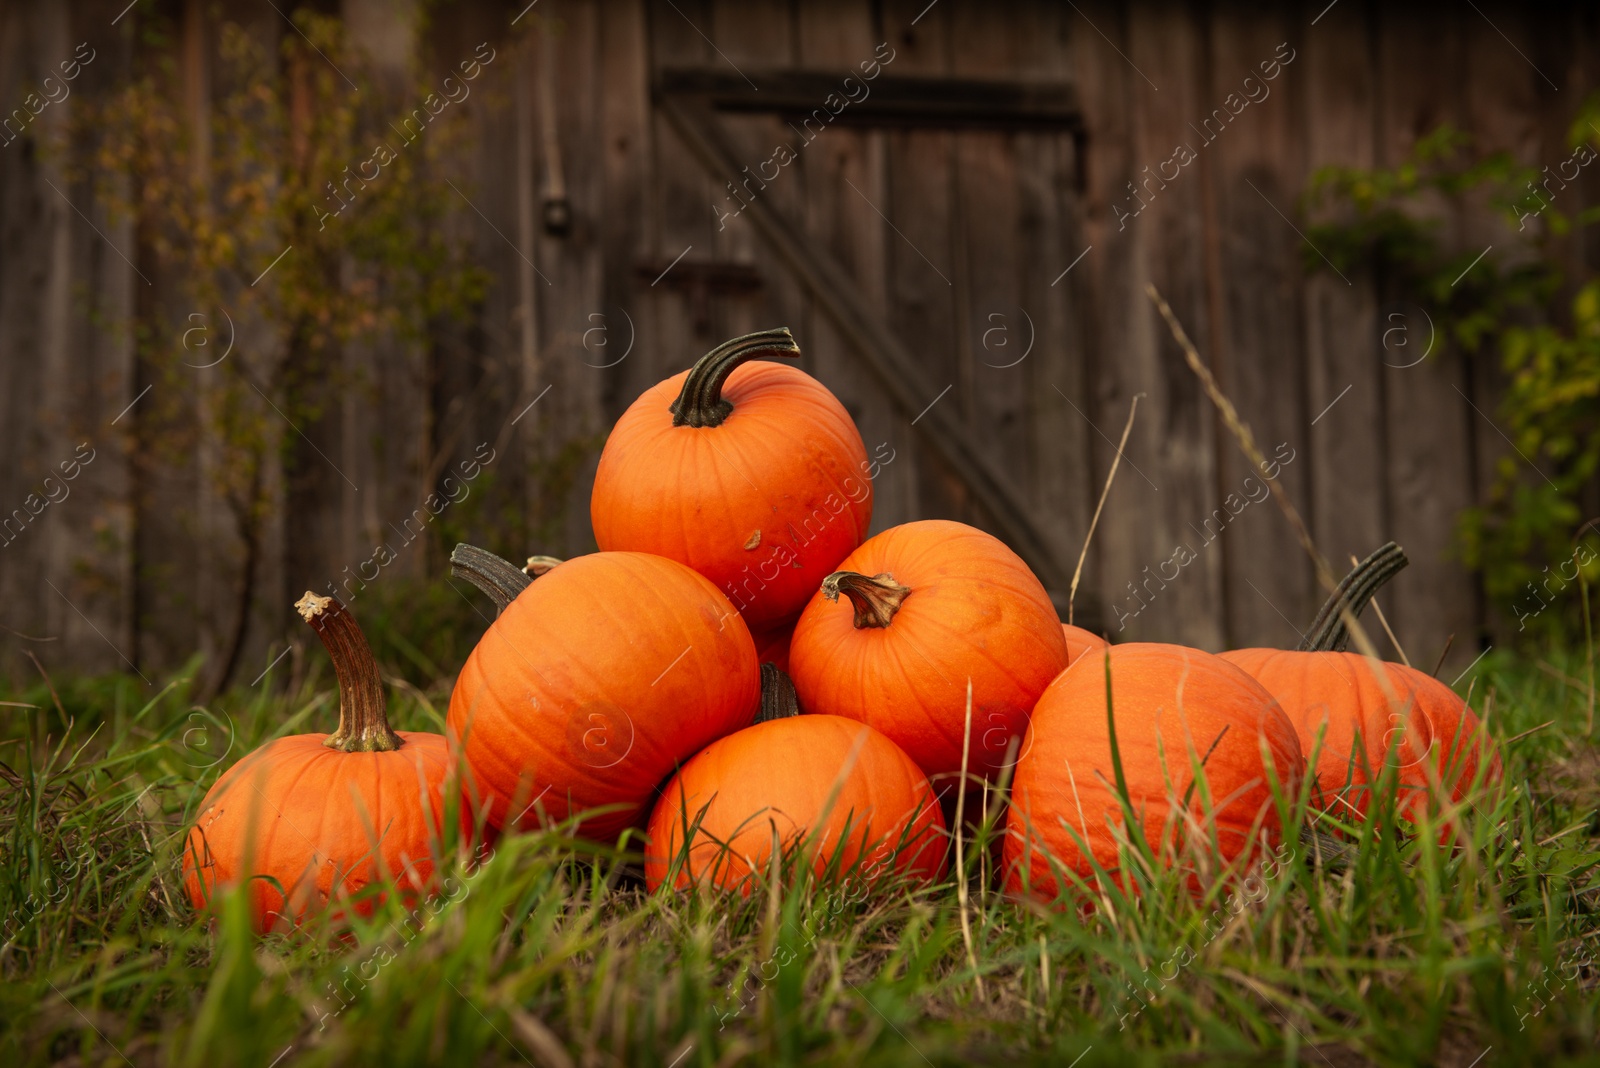 Photo of Many ripe orange pumpkins on green grass in garden